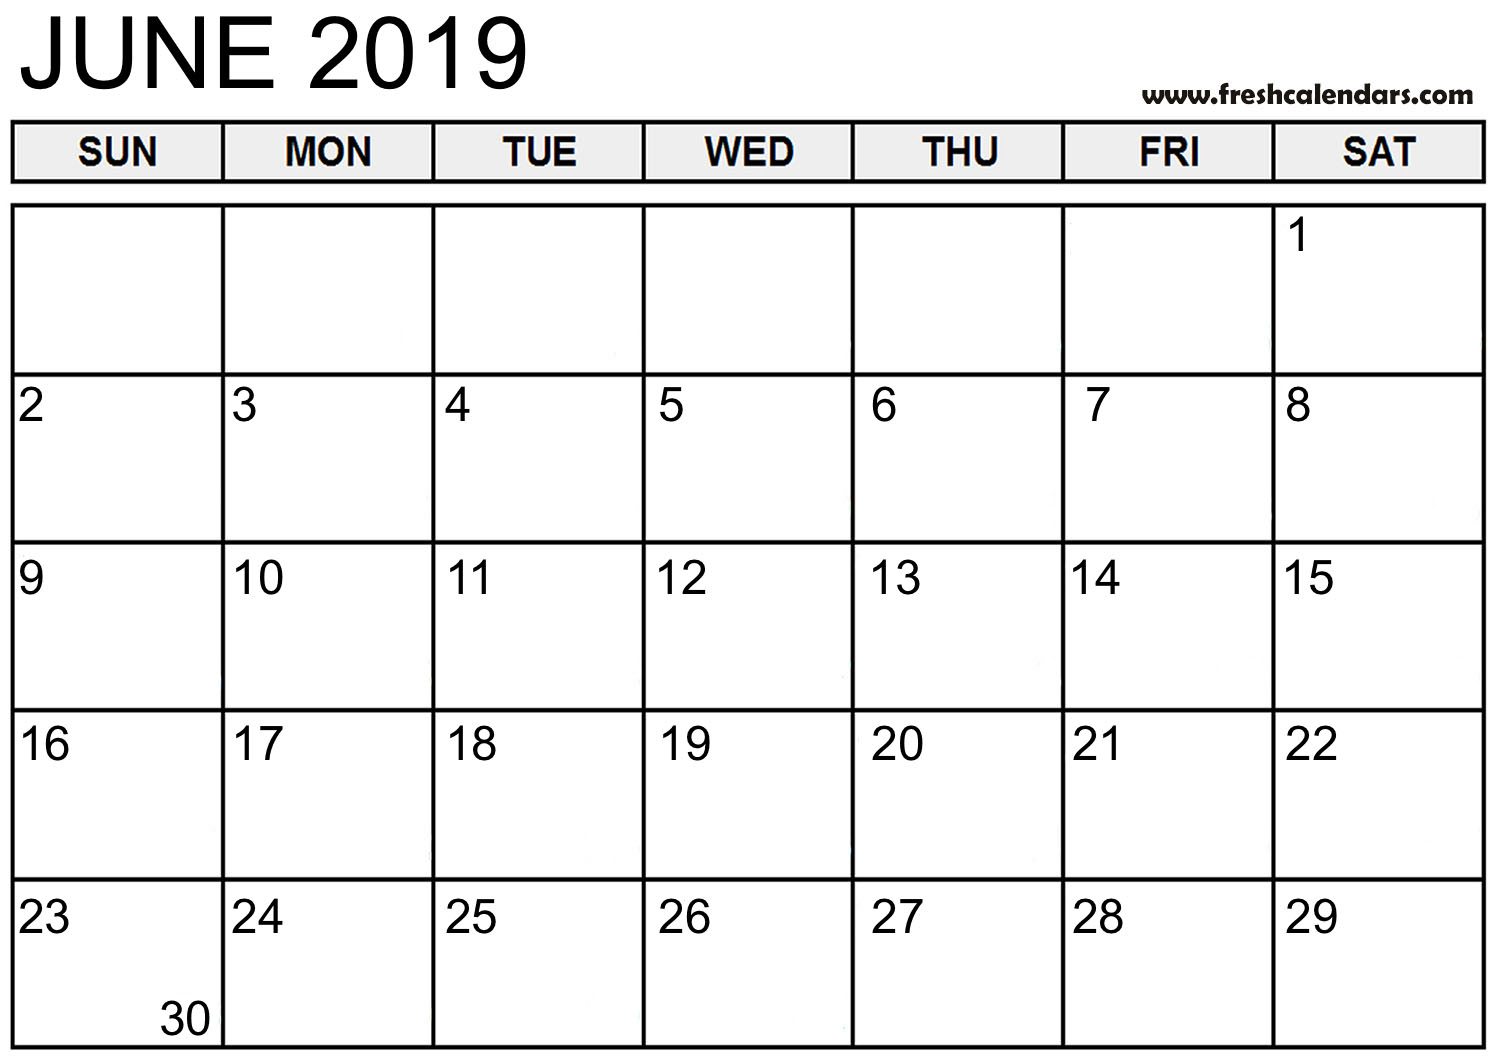 june-2019-calendar-uk-public-holidays-calendar-uk-global-day-of